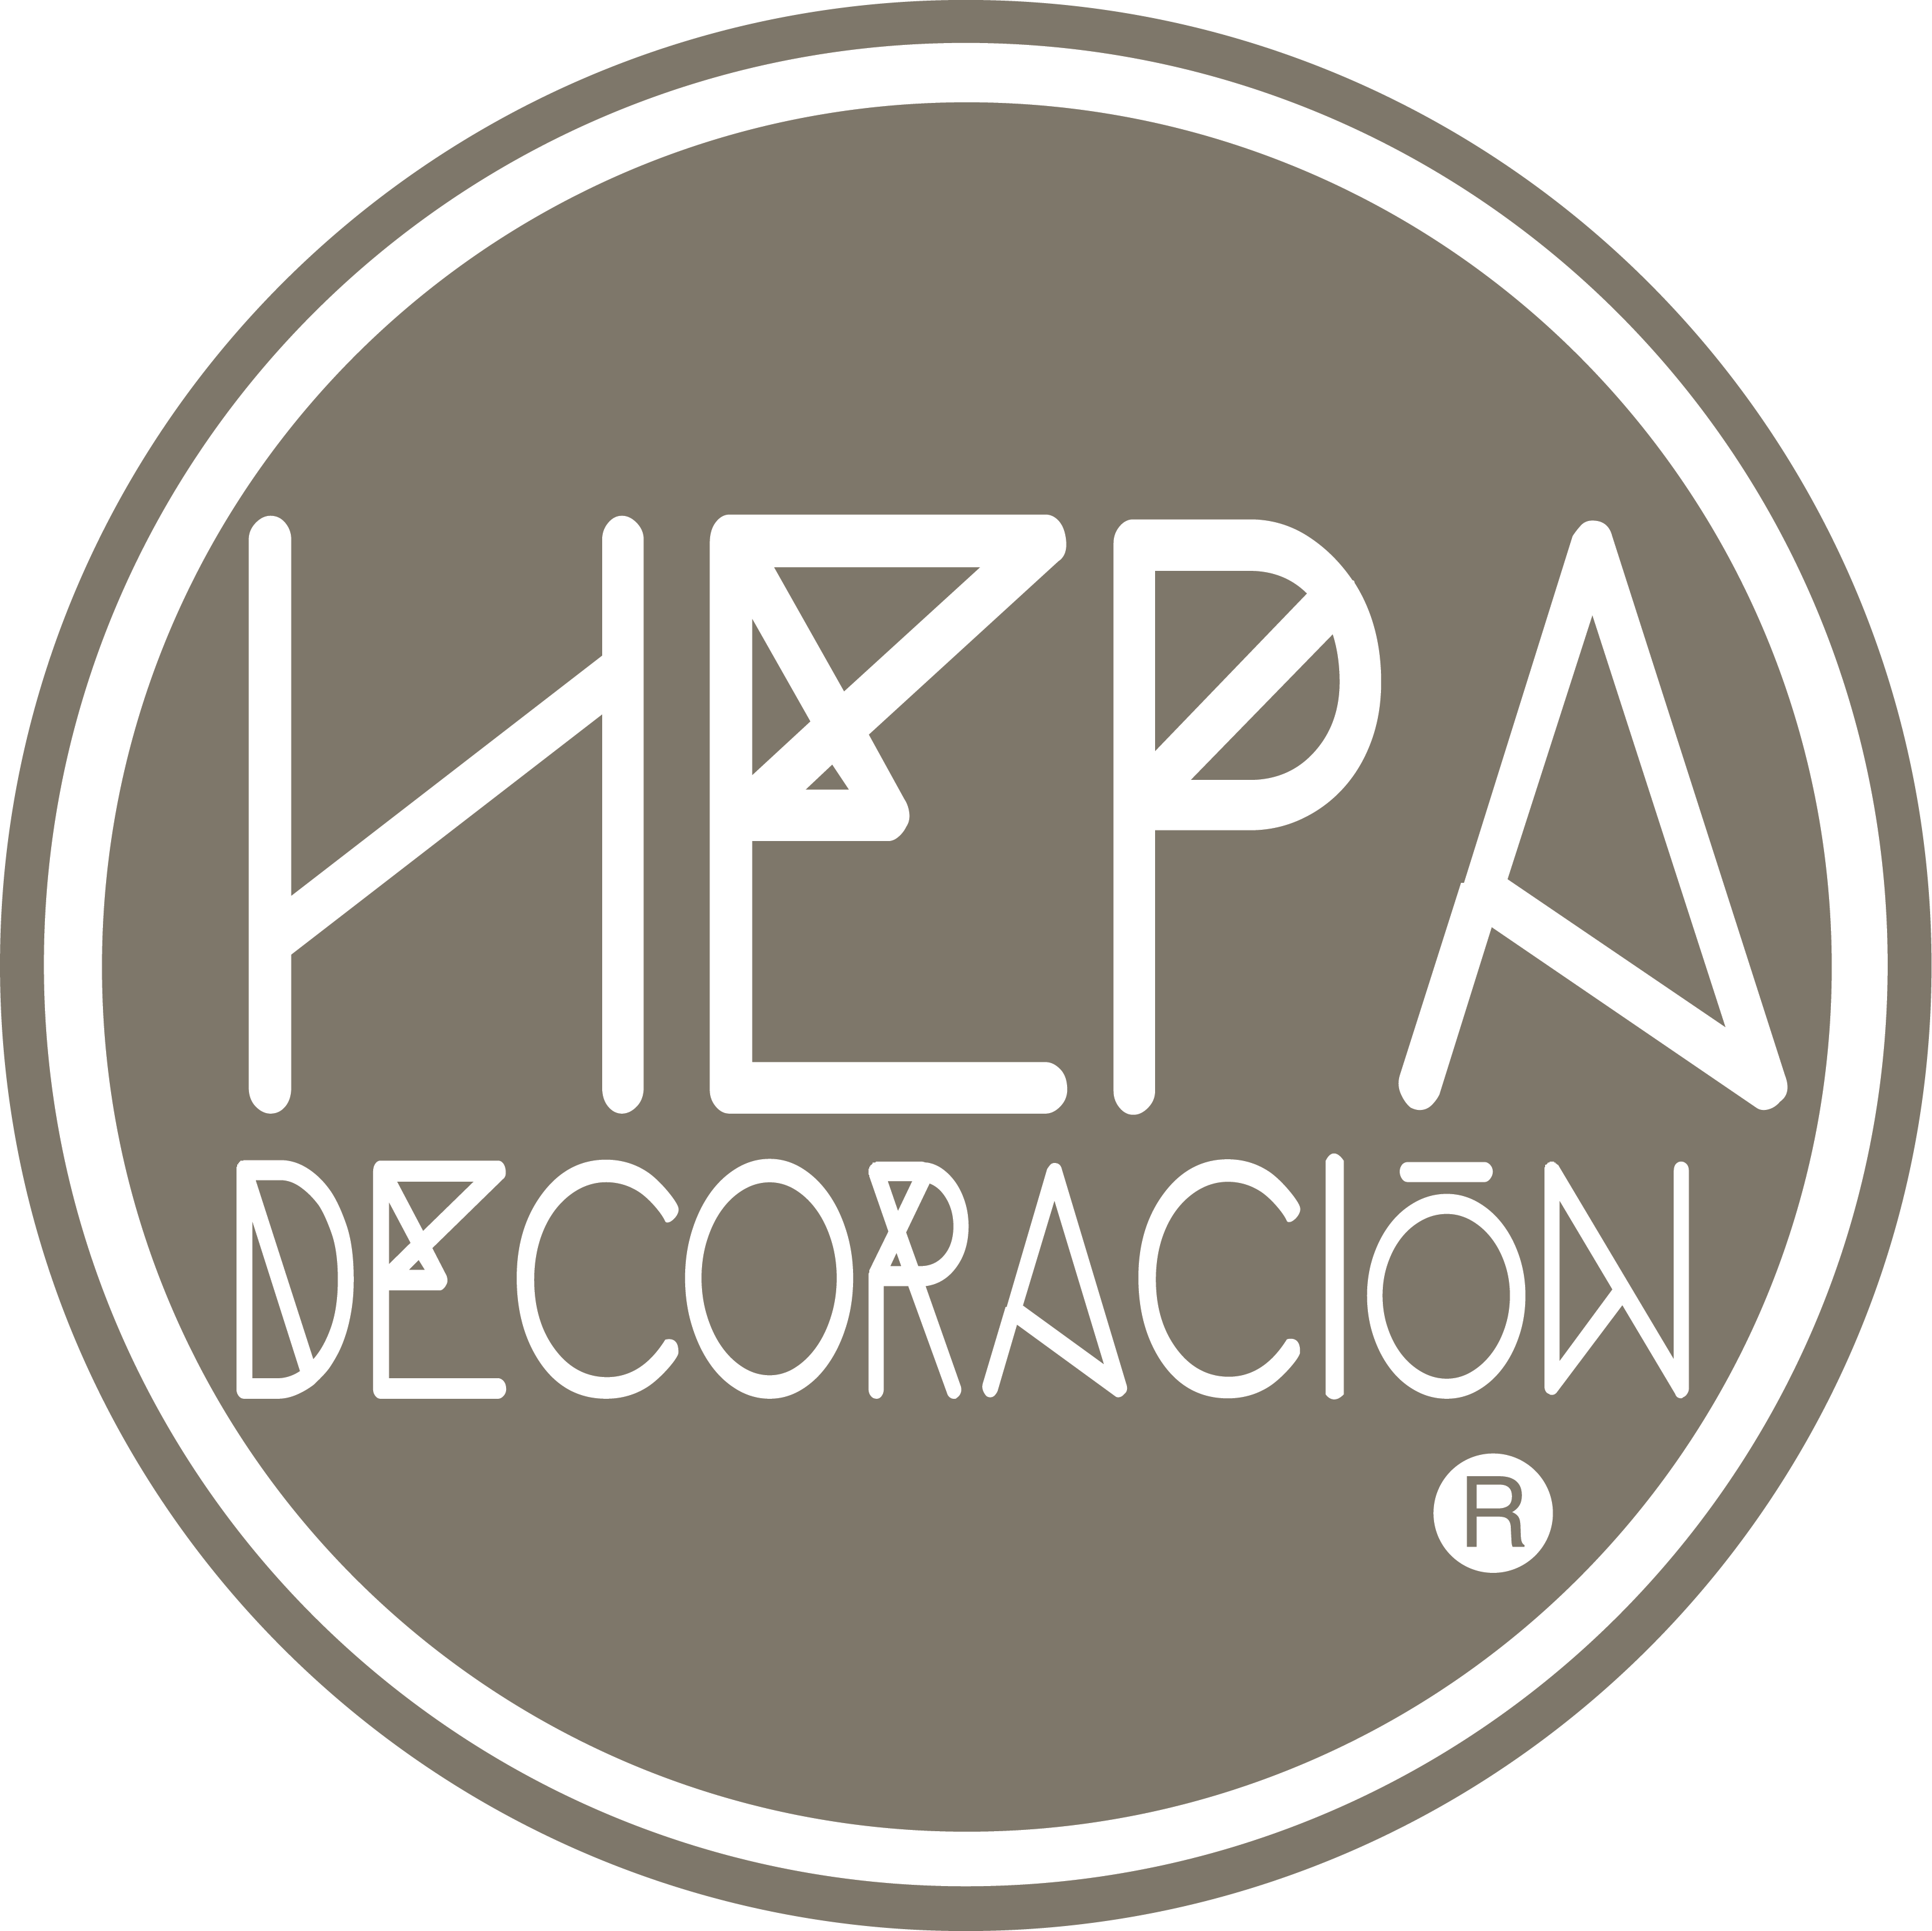 HEPA DECORACION